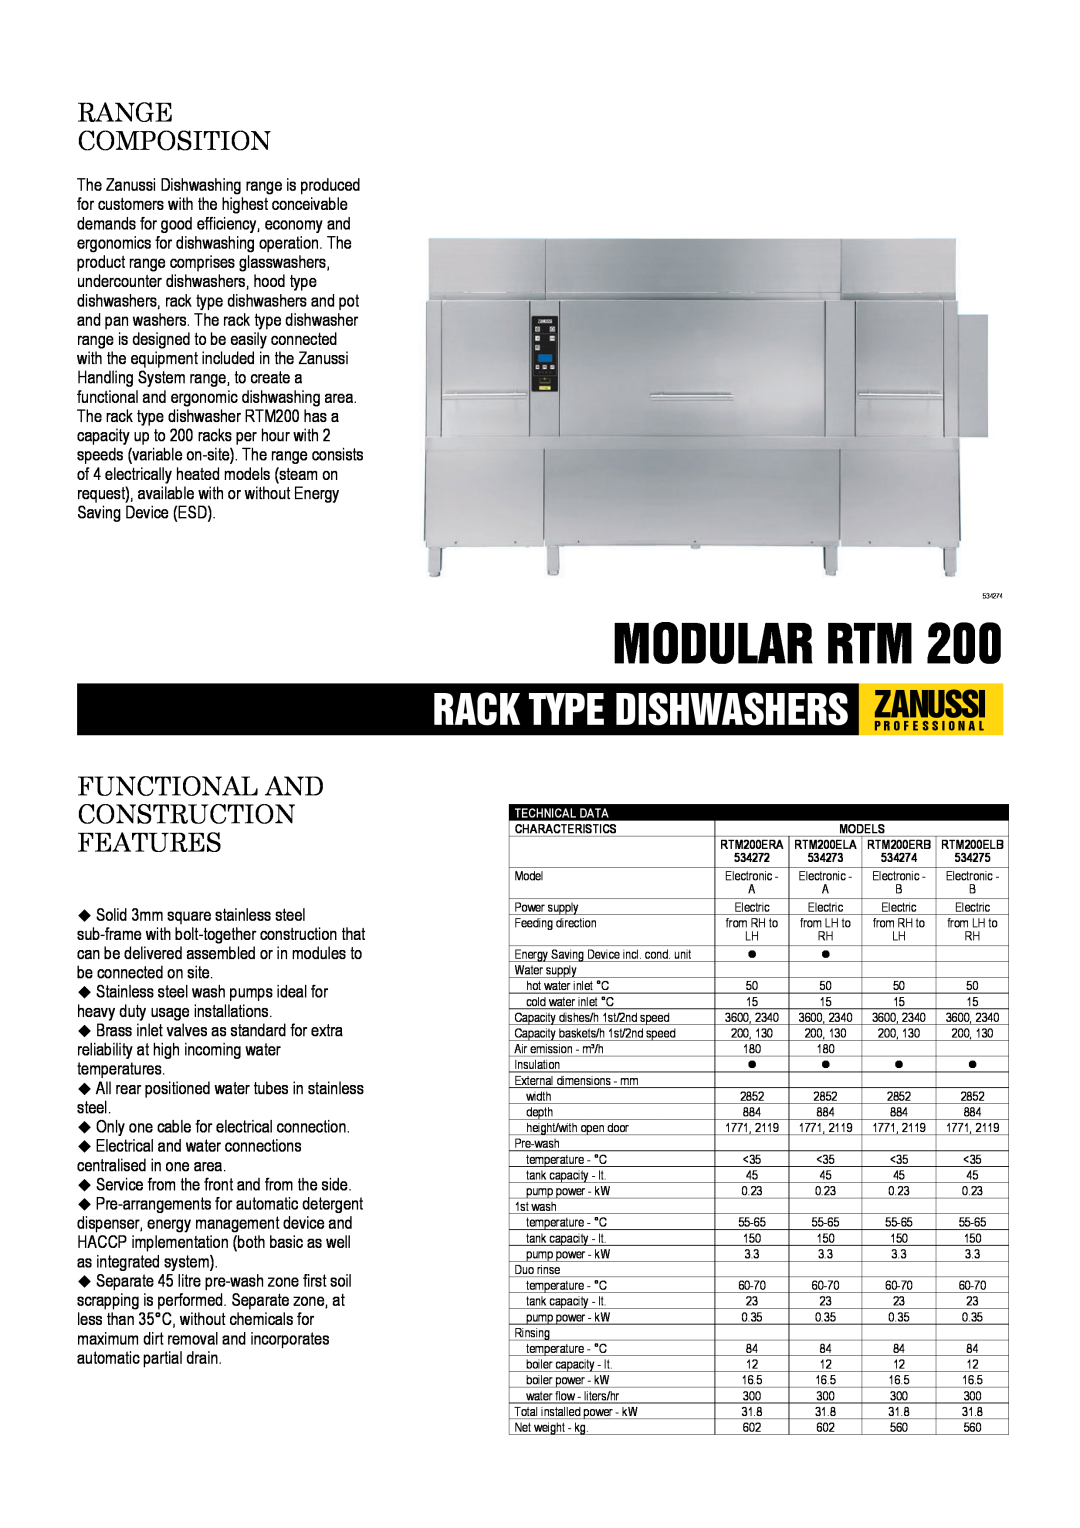 Zanussi RTM200ELA, RTM200ELB, RTM200ERA dimensions Modular Rtm, Range Composition, Functional And Construction Features 